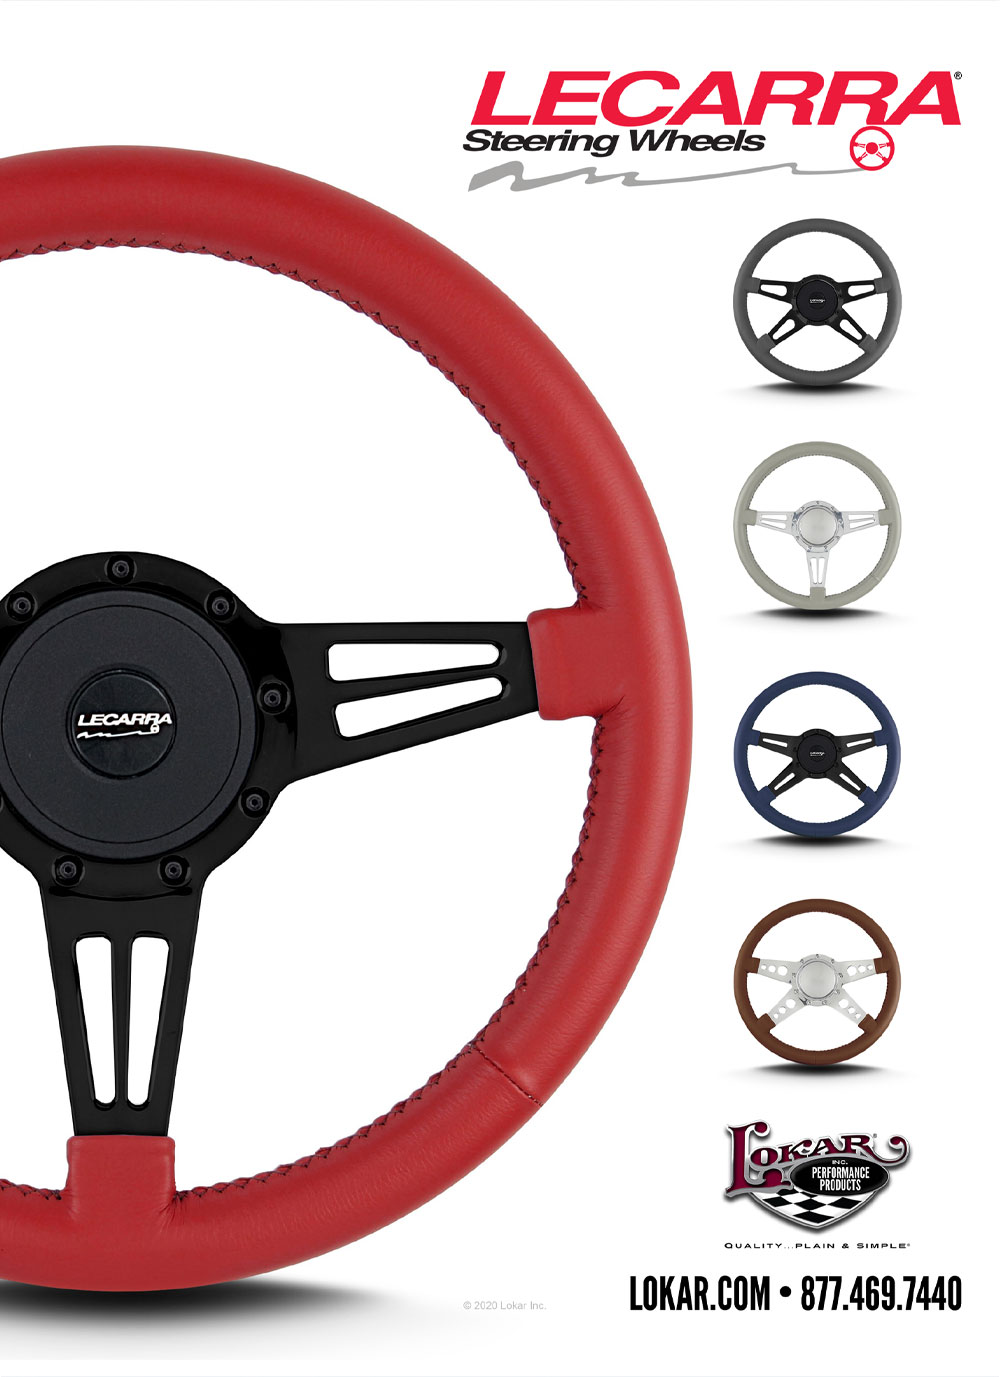 Lokar Inc. Lecarra Steering Wheels Advertisement